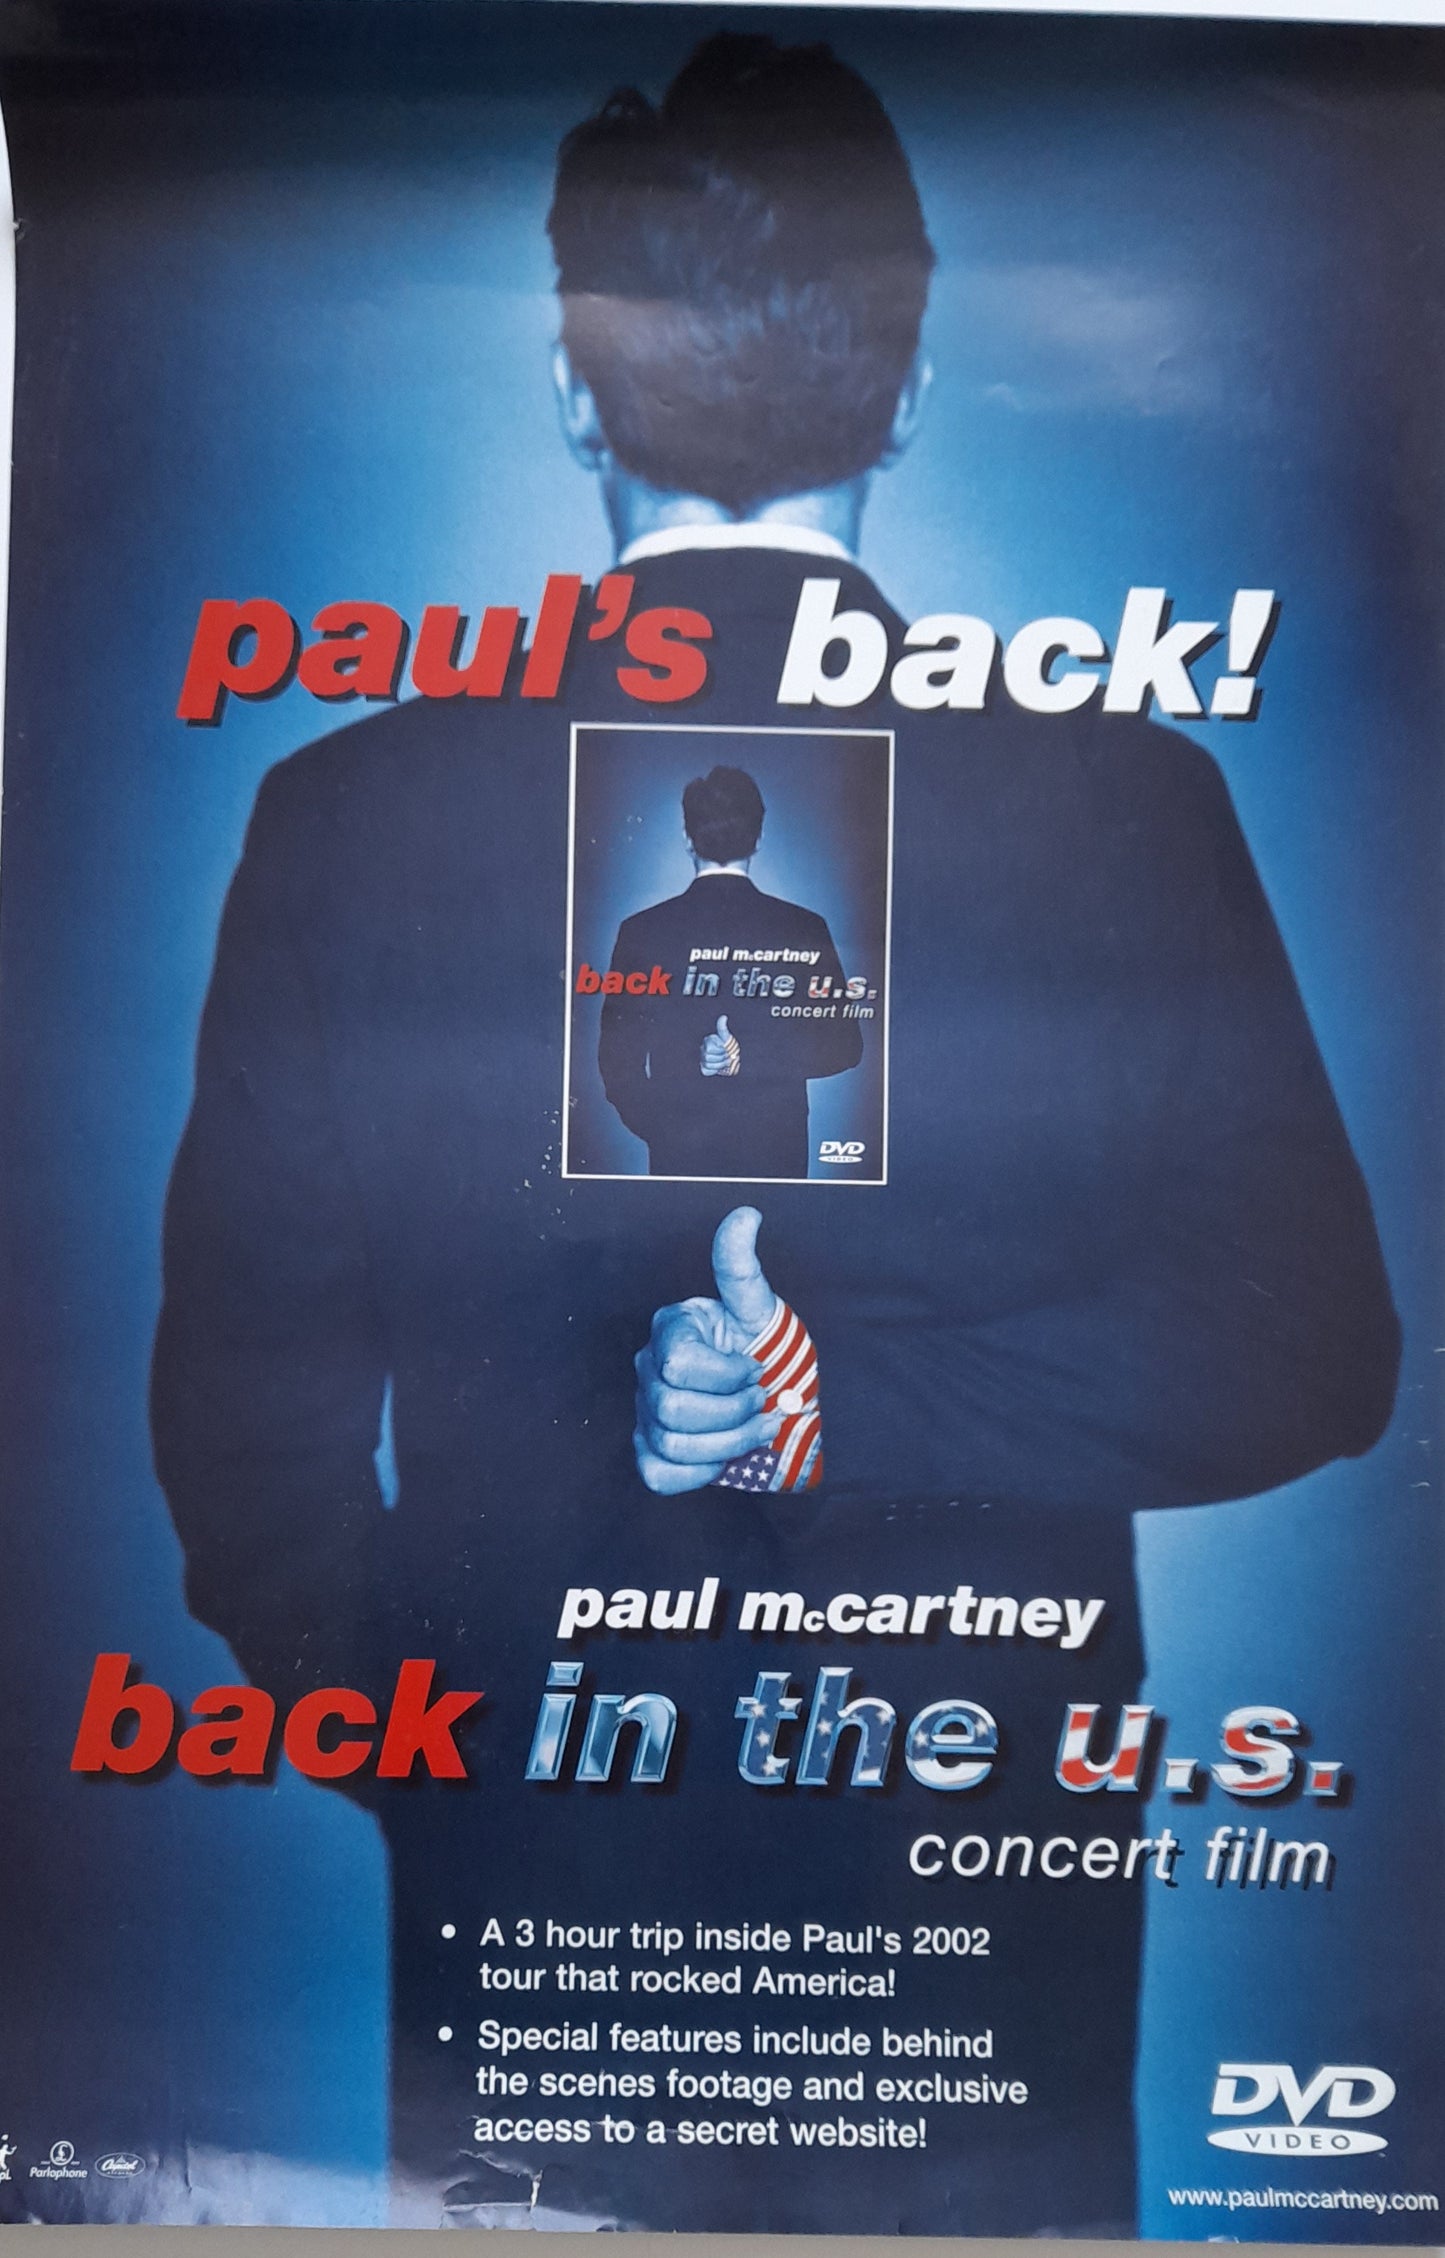 Paul McCartney Back in the US Concert Film DVD Promotional Poster